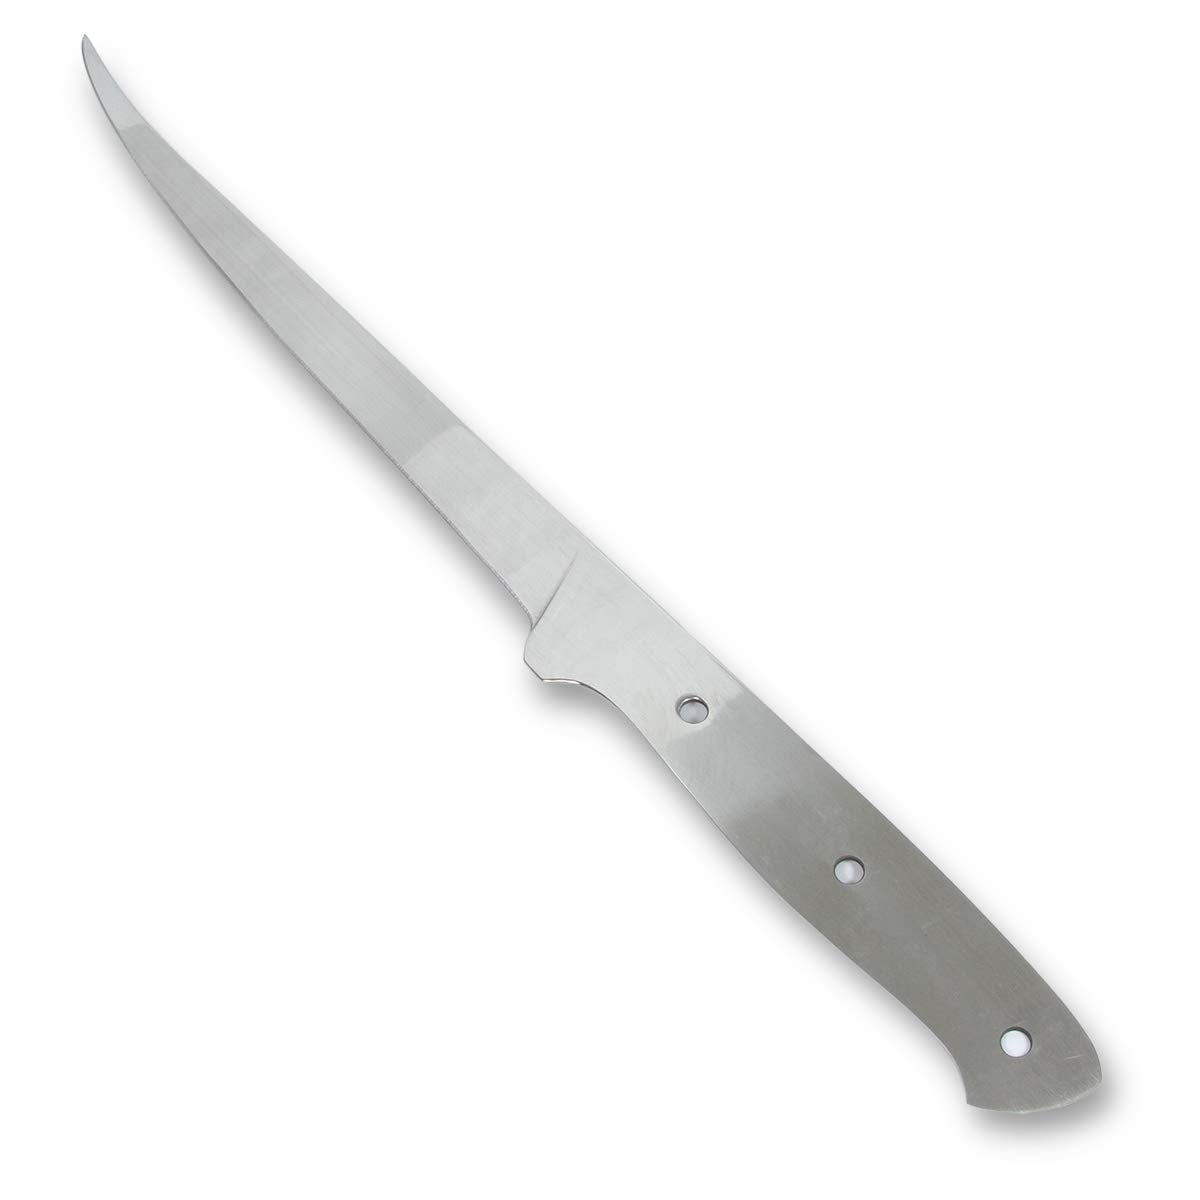 USA Knifemaker Fillet Knife Blade Blank 001 - 9cr18MoV Stainless Steel - 12 12 OAL